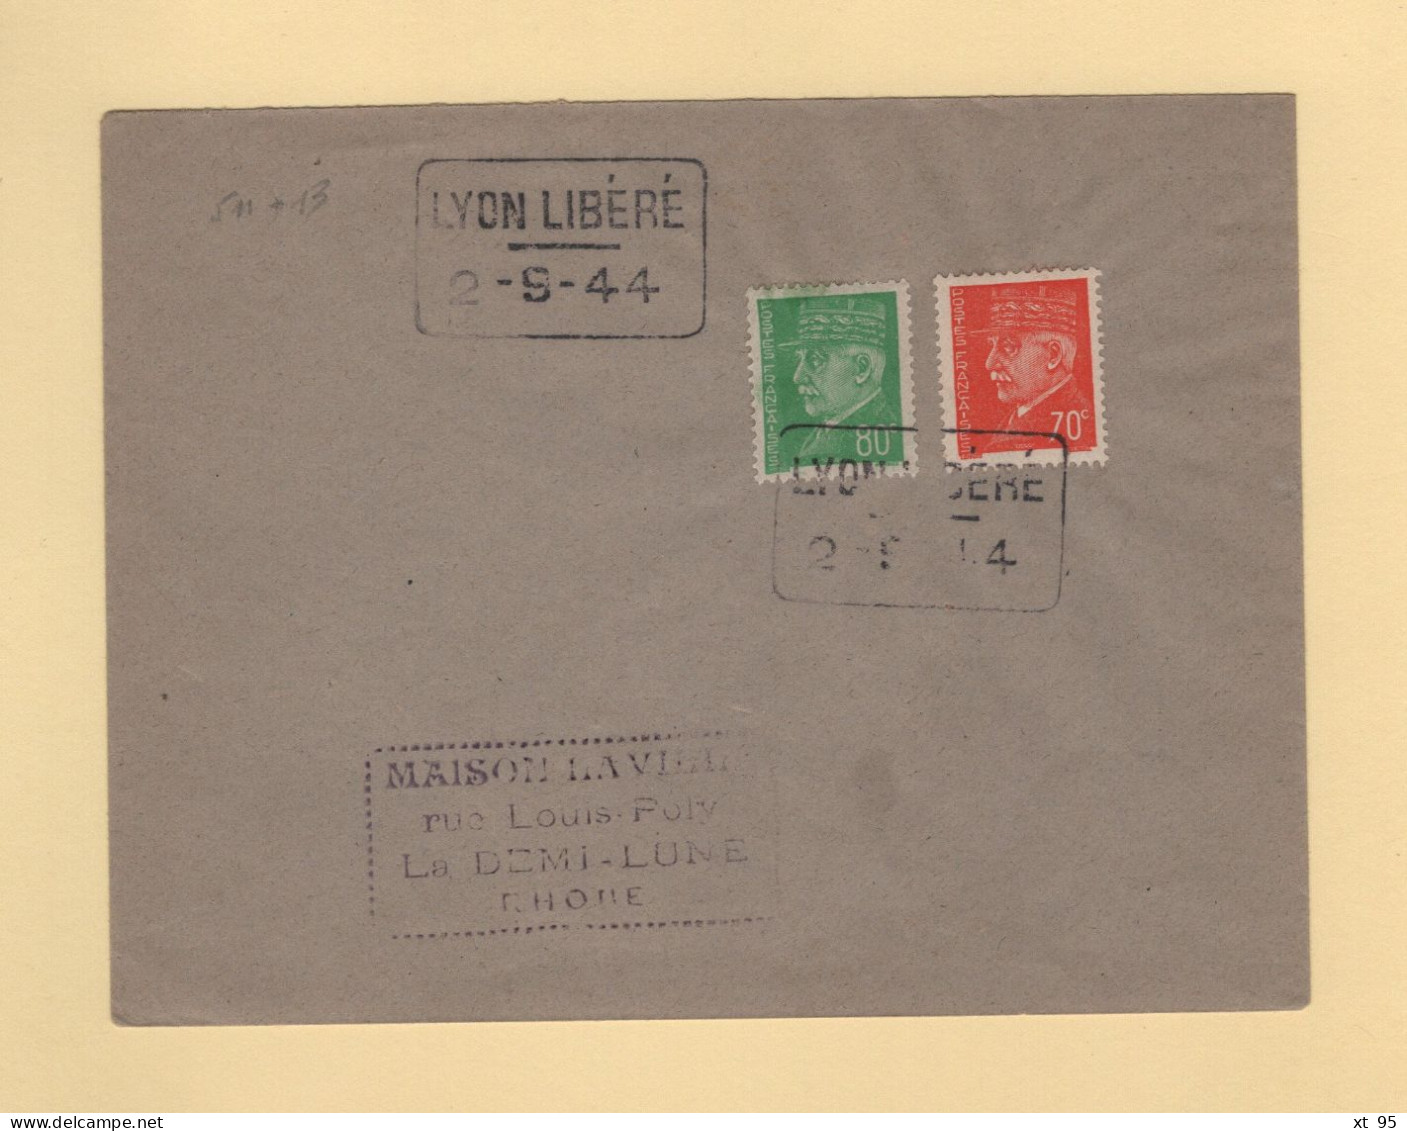 Liberation - Lyon Libere - 2-9-44 - Type Petain - Bevrijding